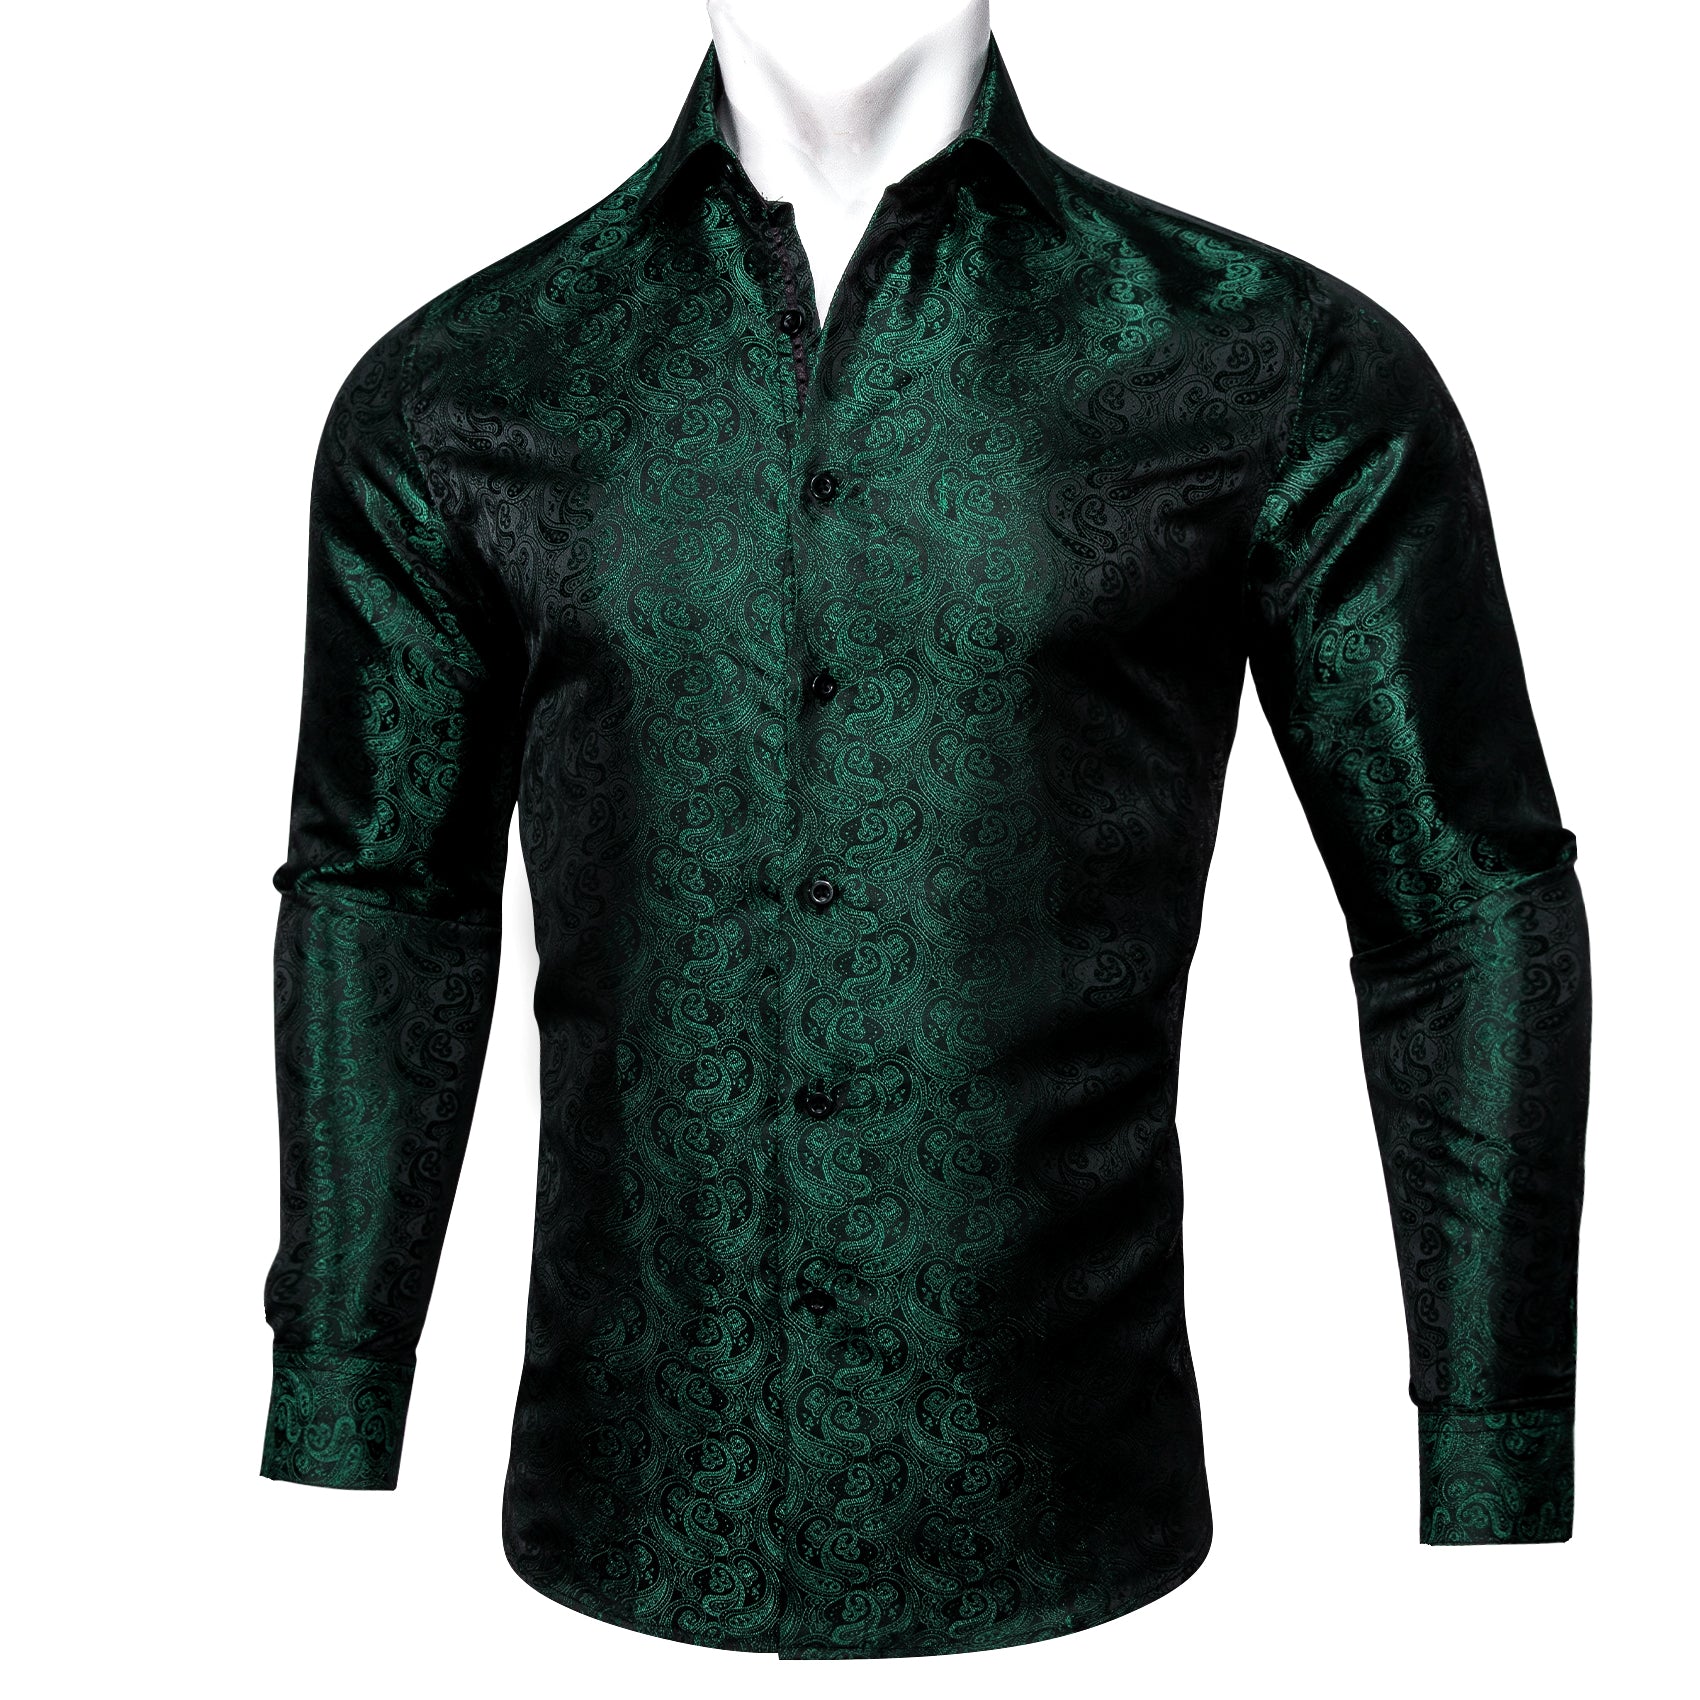 mens patterned button down shirts black shirt Dark Green paisley jacquaed shirt 